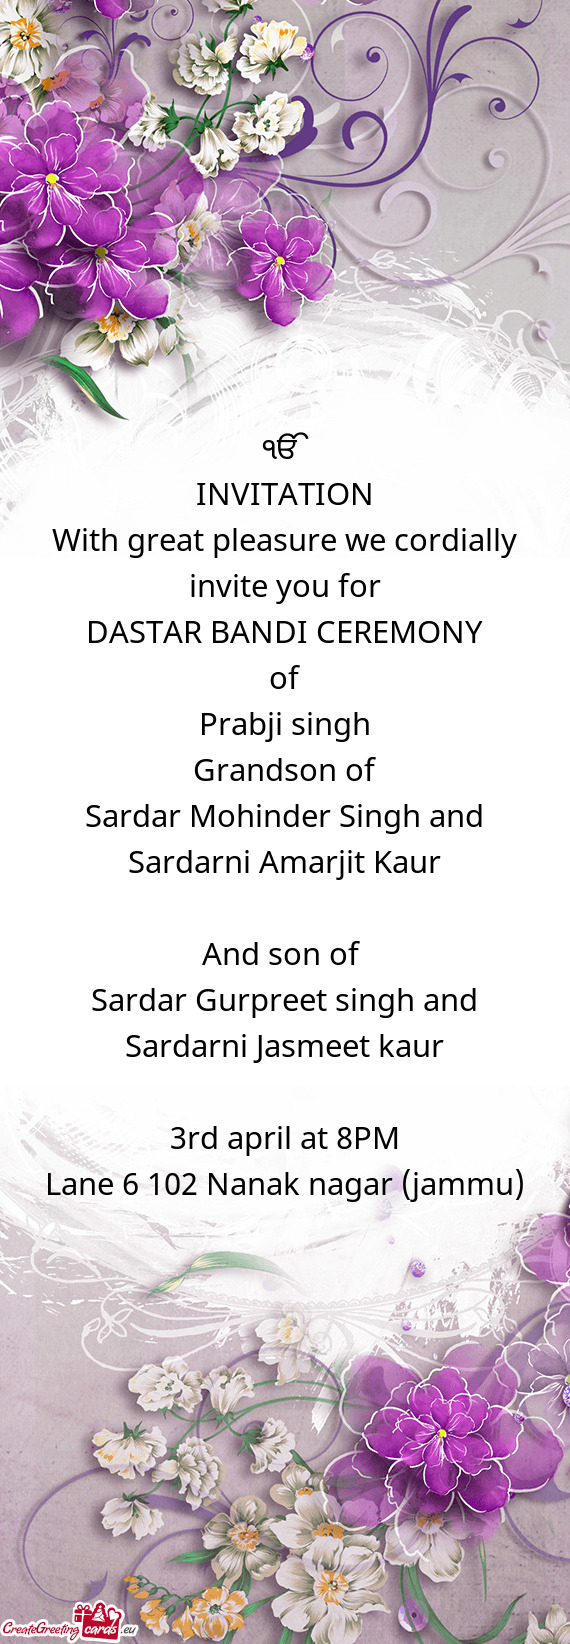 Sardar Mohinder Singh and Sardarni Amarjit Kaur